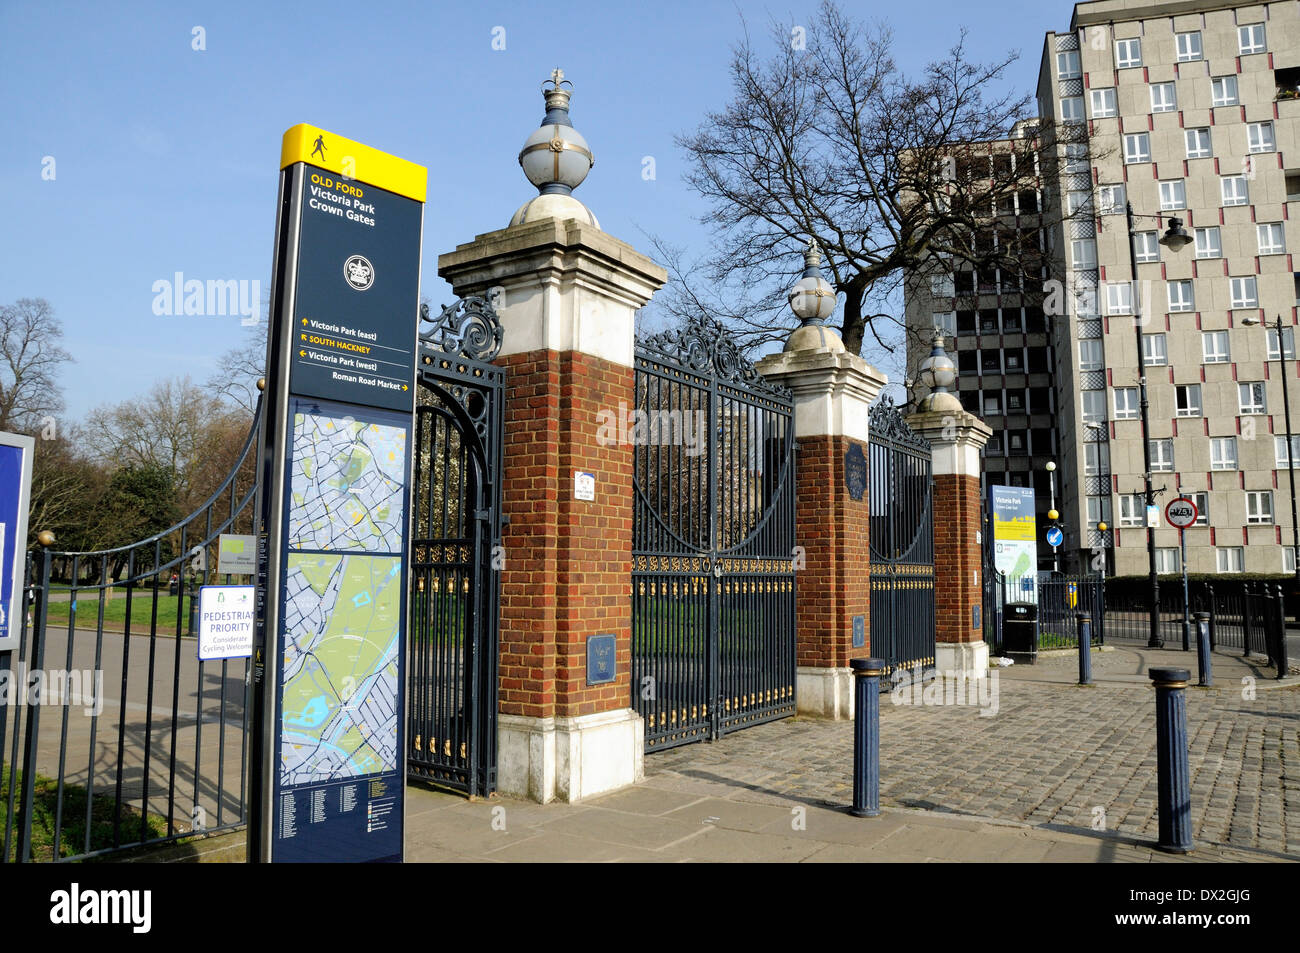 Entrance to Victoria Park, Crown Gates, London Borough of Tower Hamlets, england UK Stock Photo